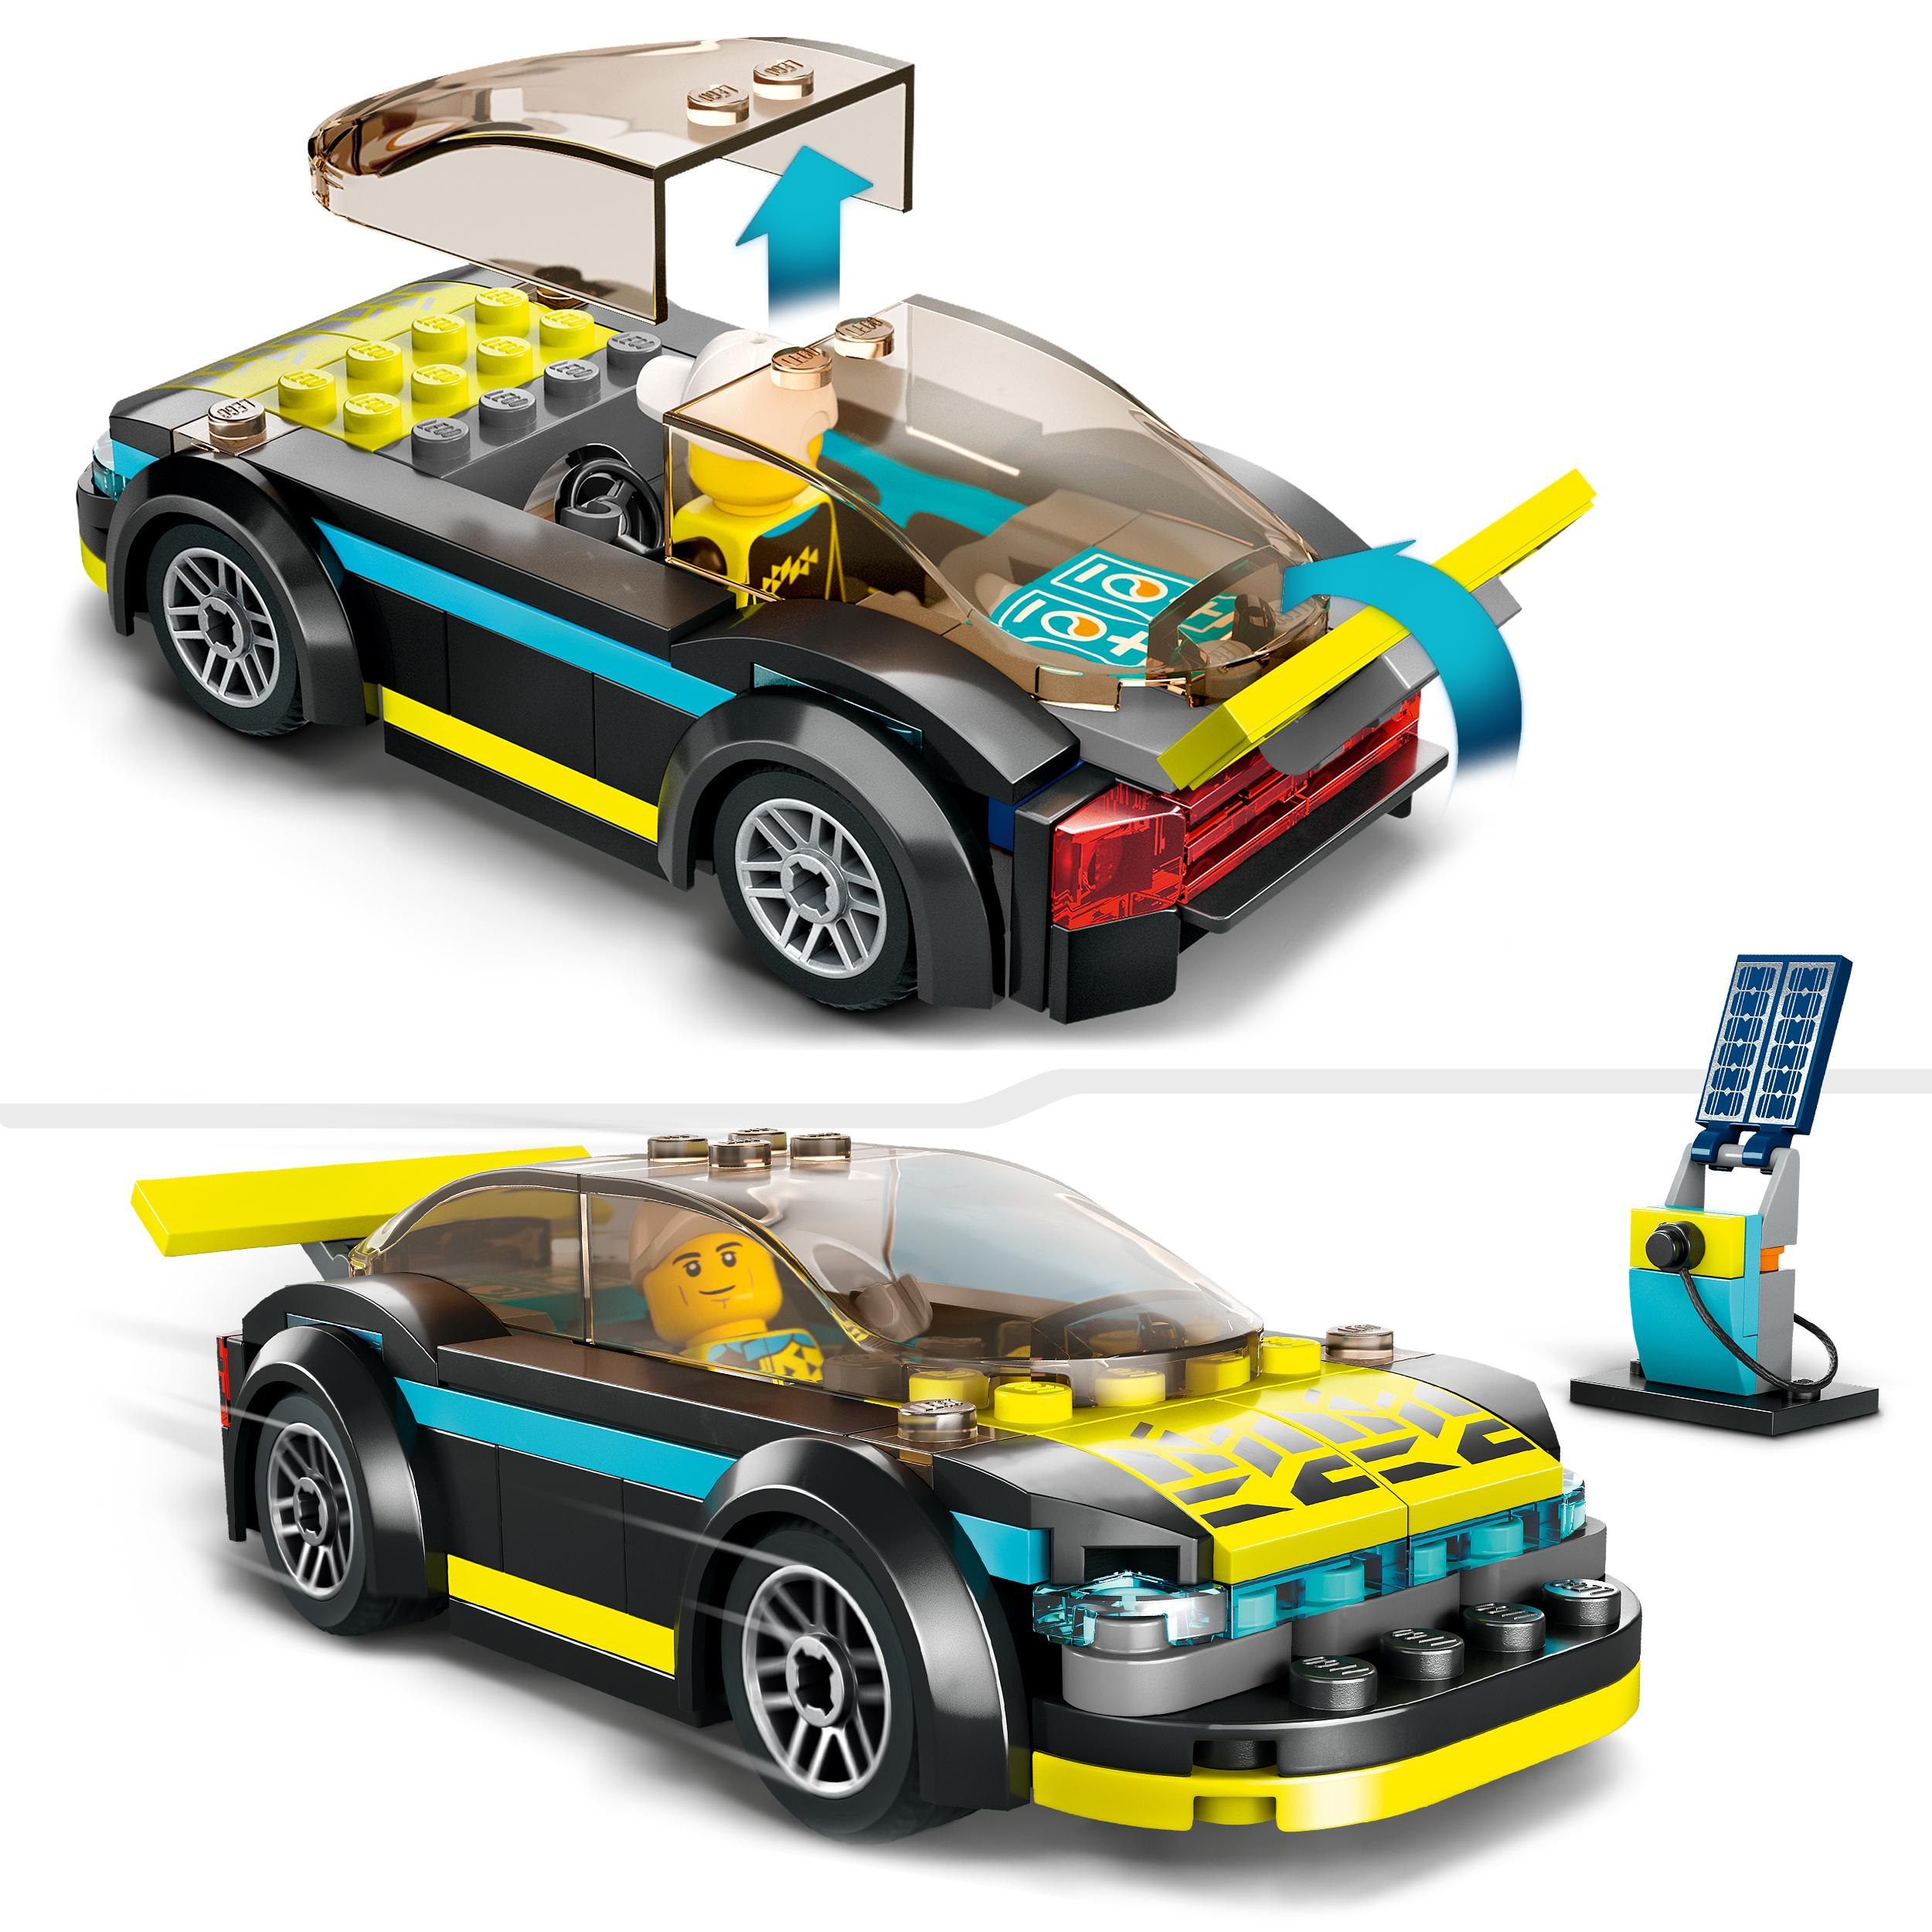 60383 Mehrfarbig City LEGO Elektro-Sportwagen Bausatz,